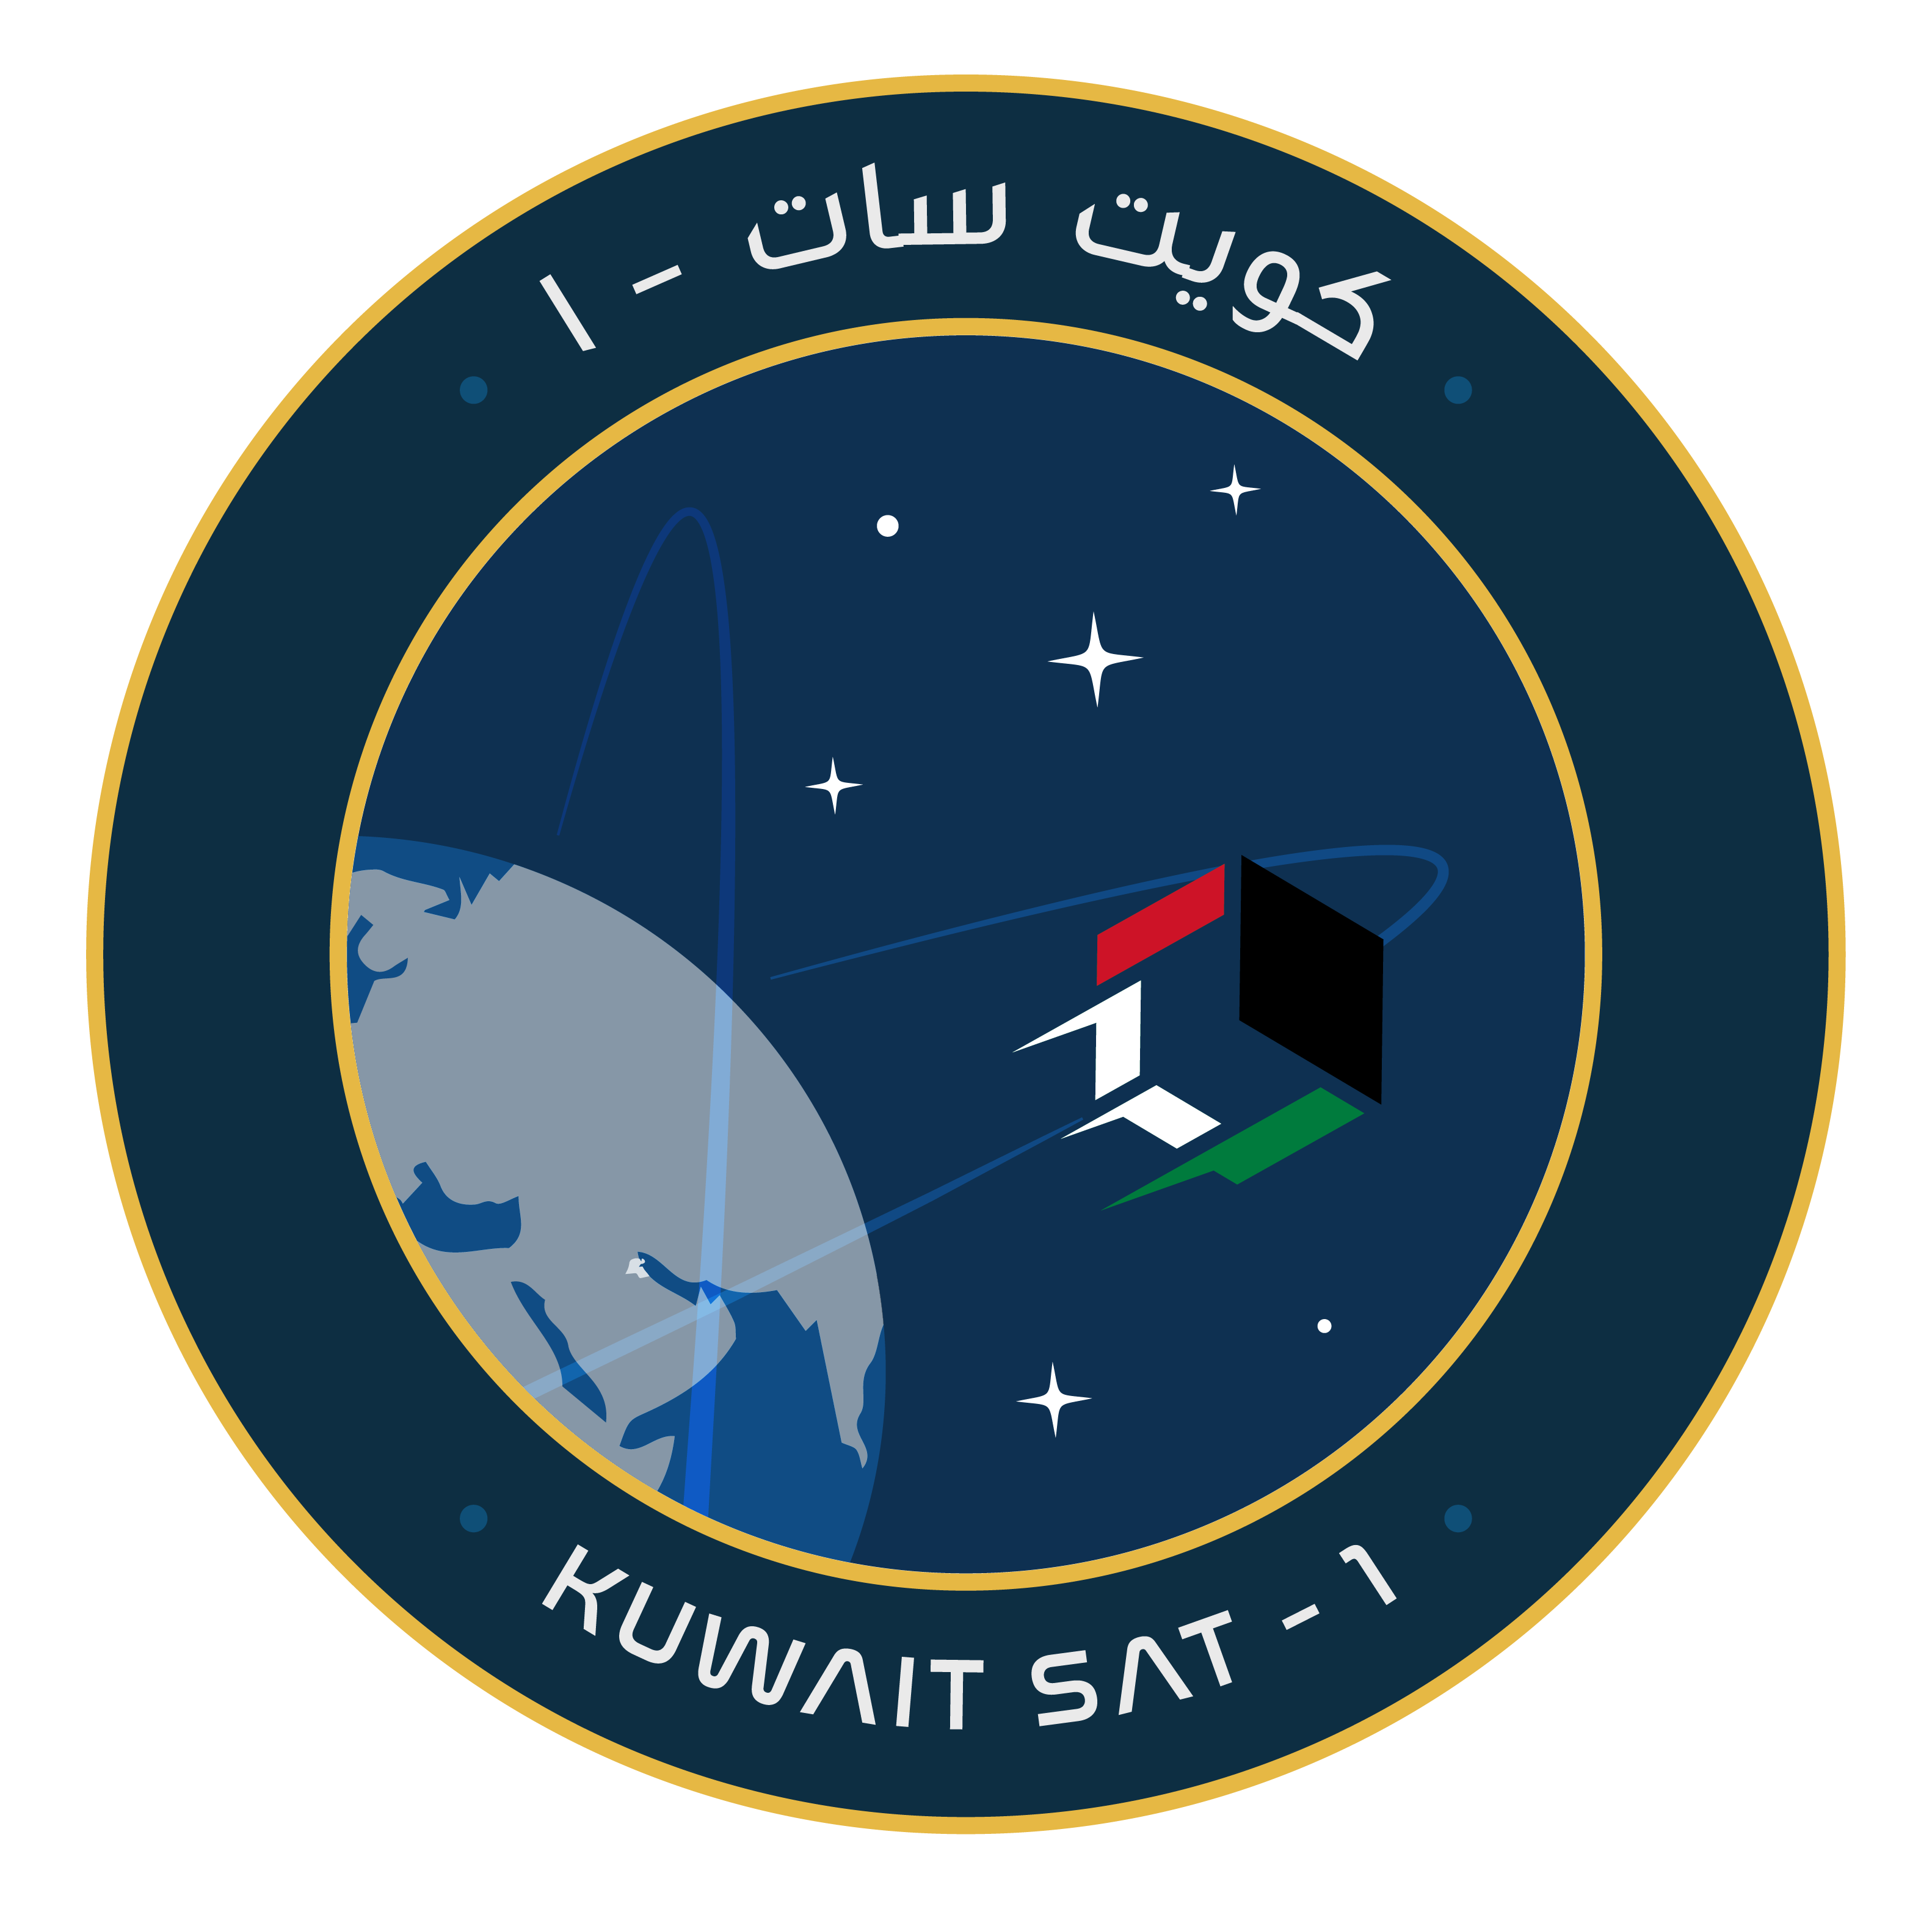 KuwaitSat-1